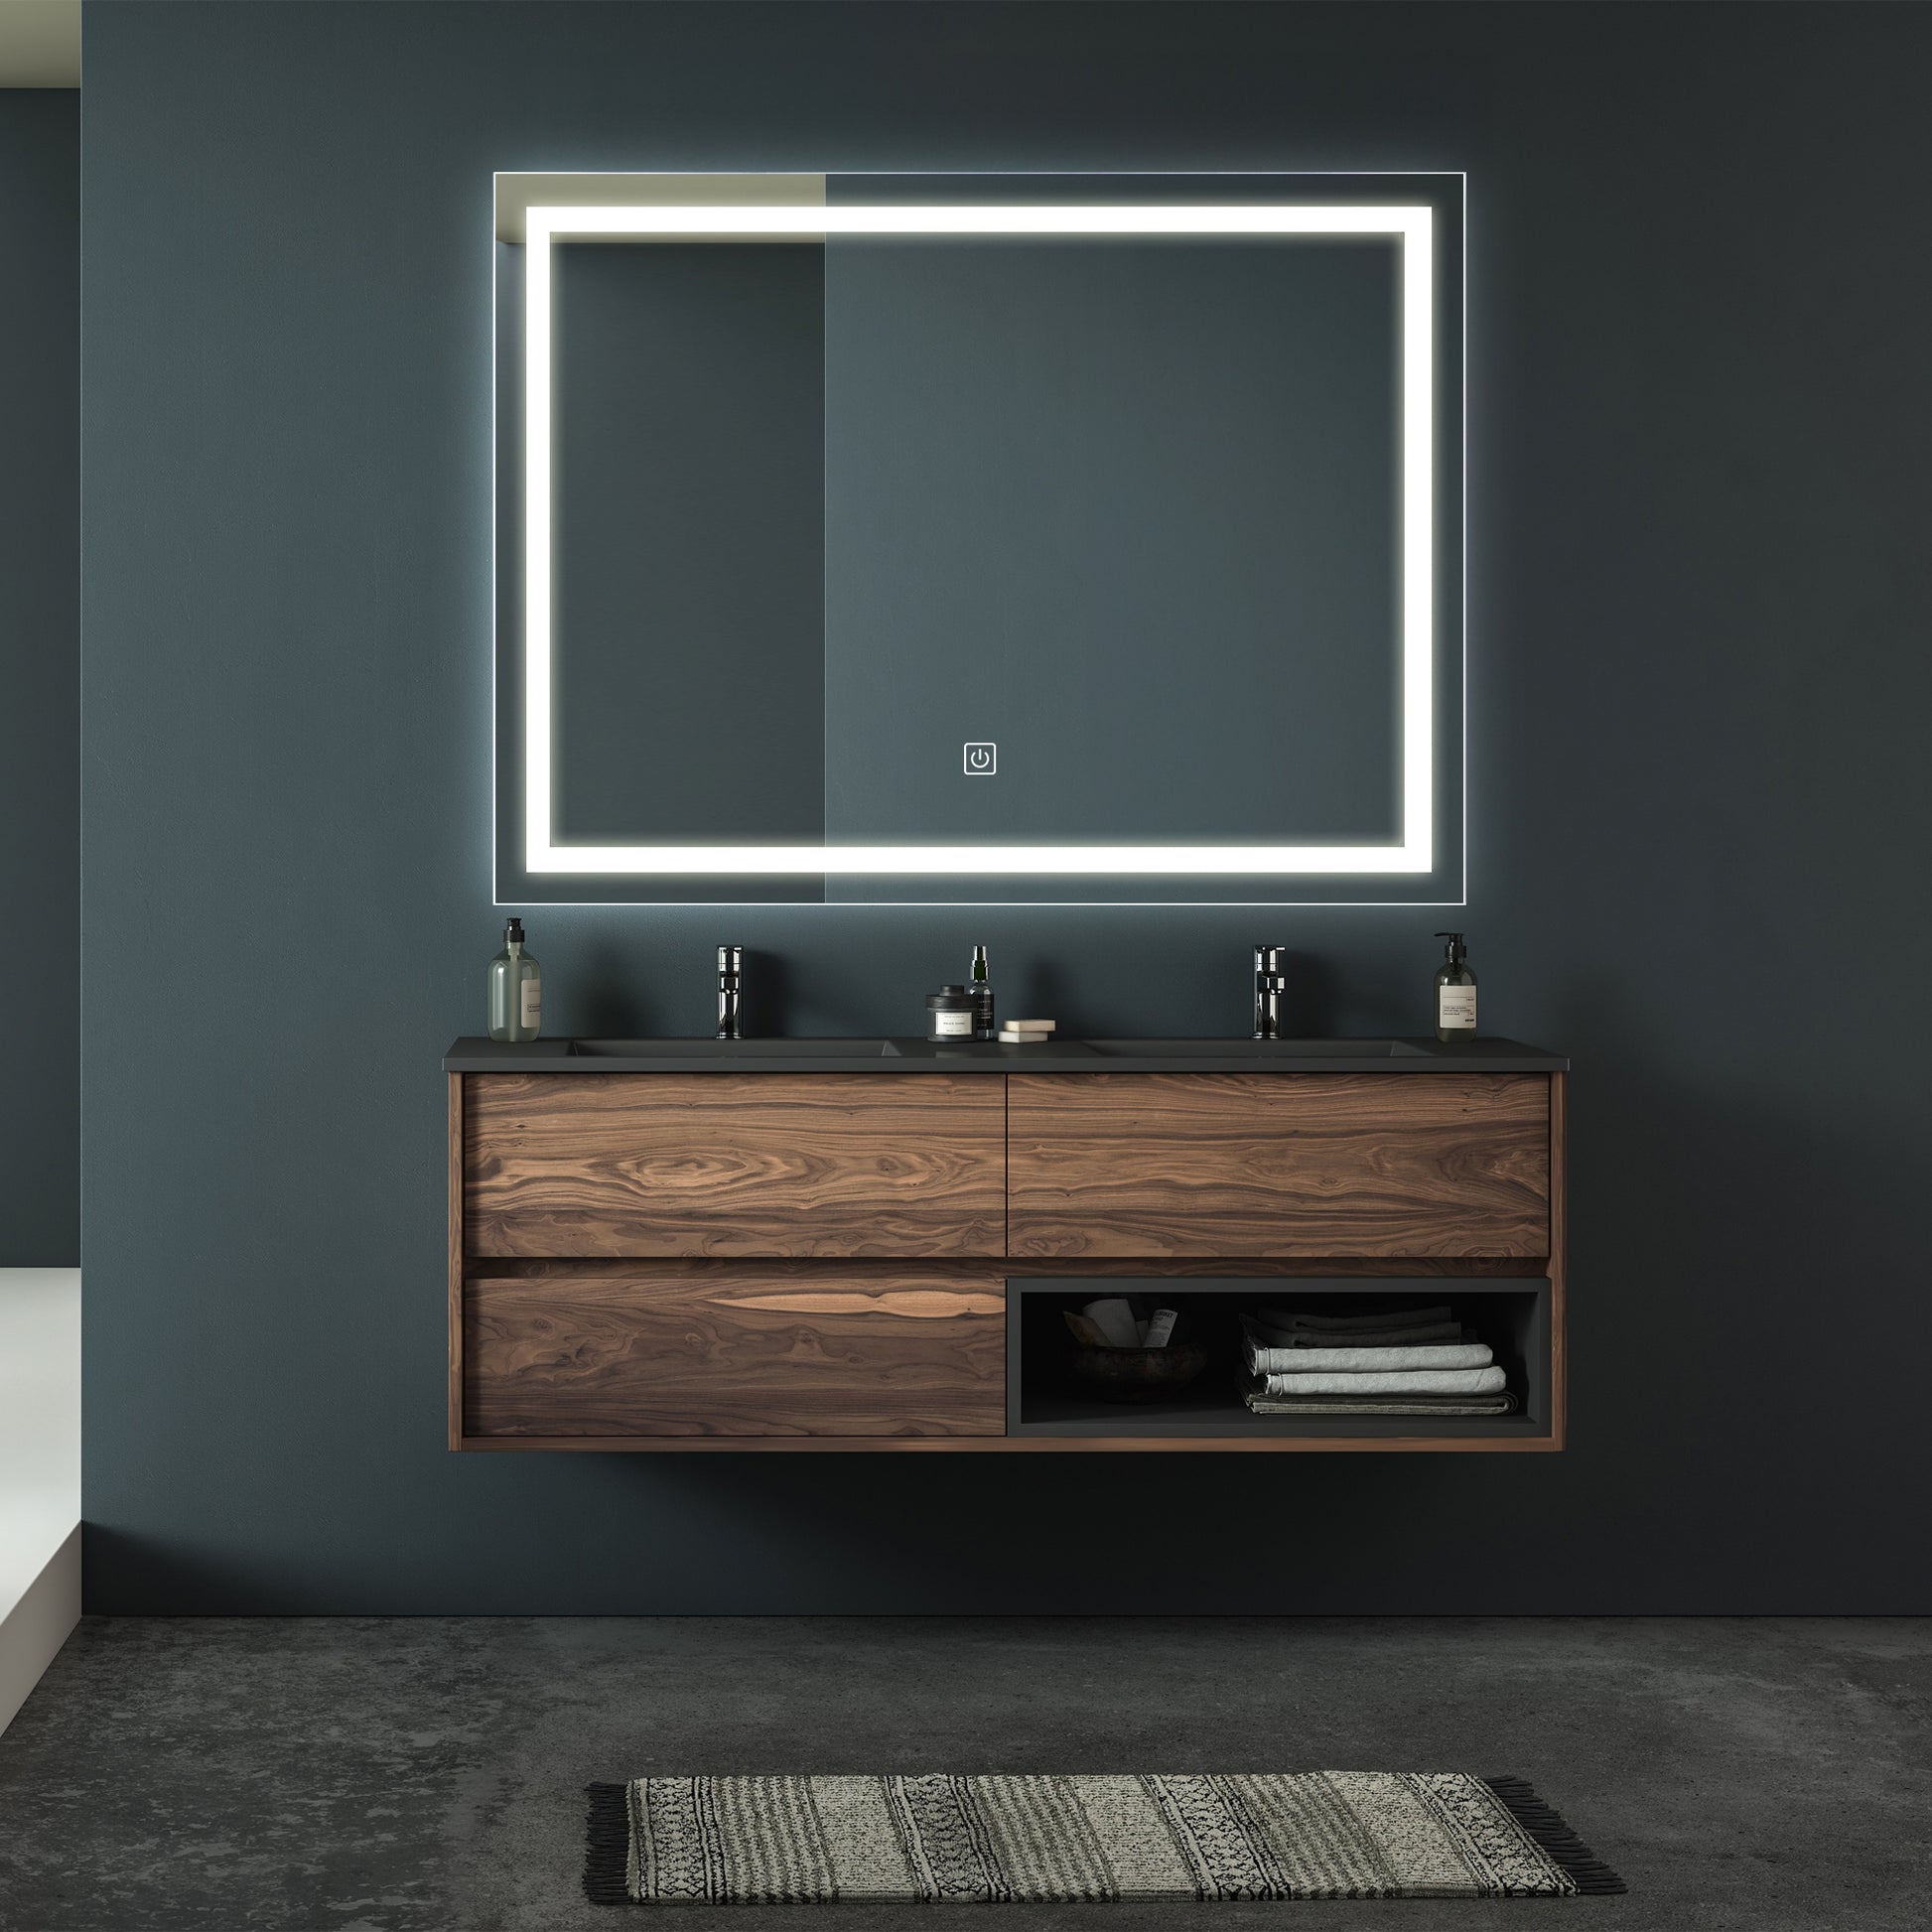 40X32 inch Bathroom Led Classy Vanity Mirror with High silver-glass